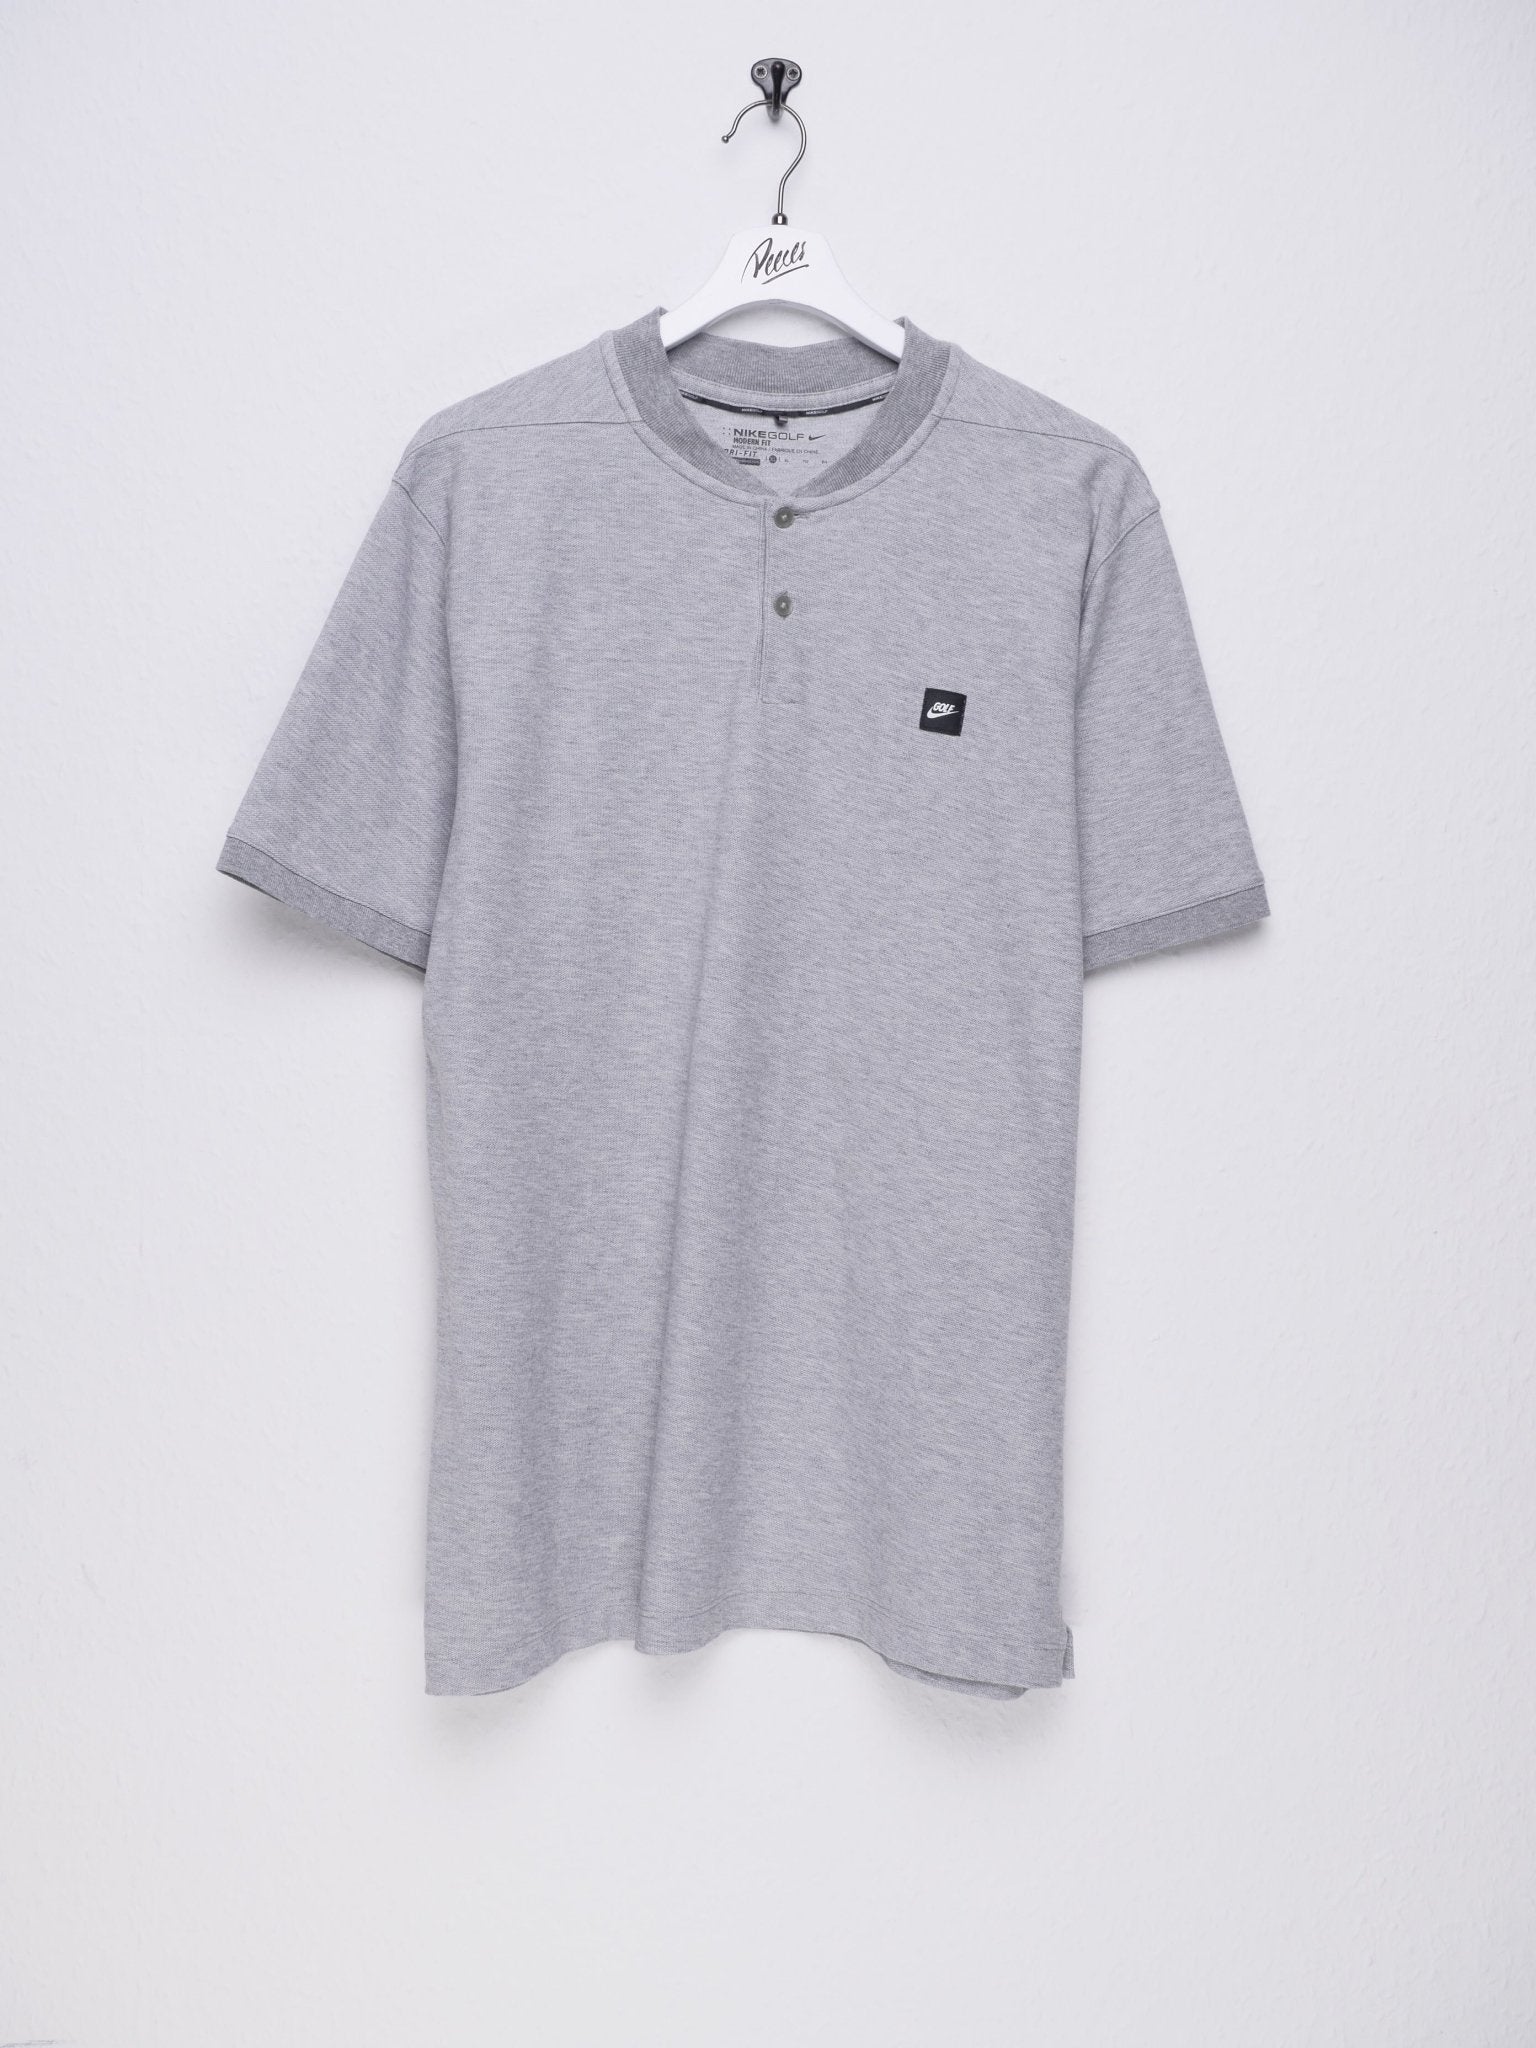 nike Golf embroidered Logo Shirt - Peeces